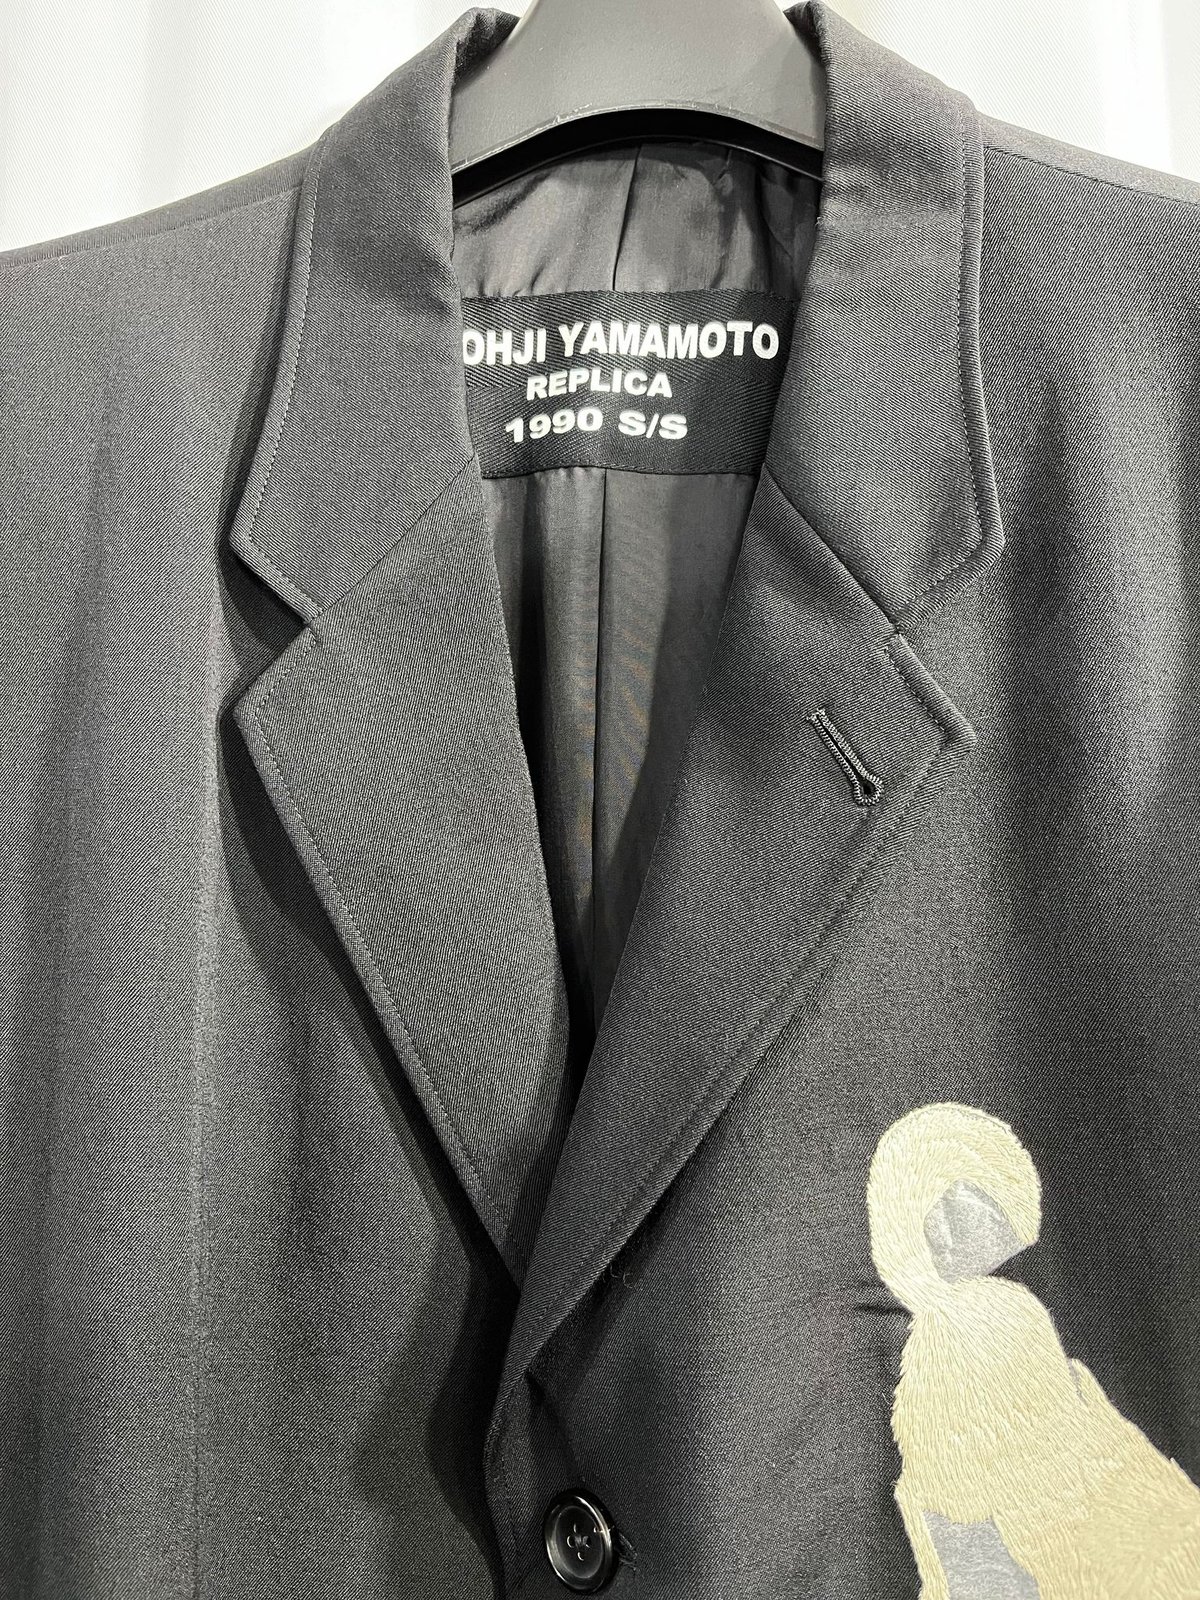 2018AW yohji yamamoto pour homme 1990SS REPLICA